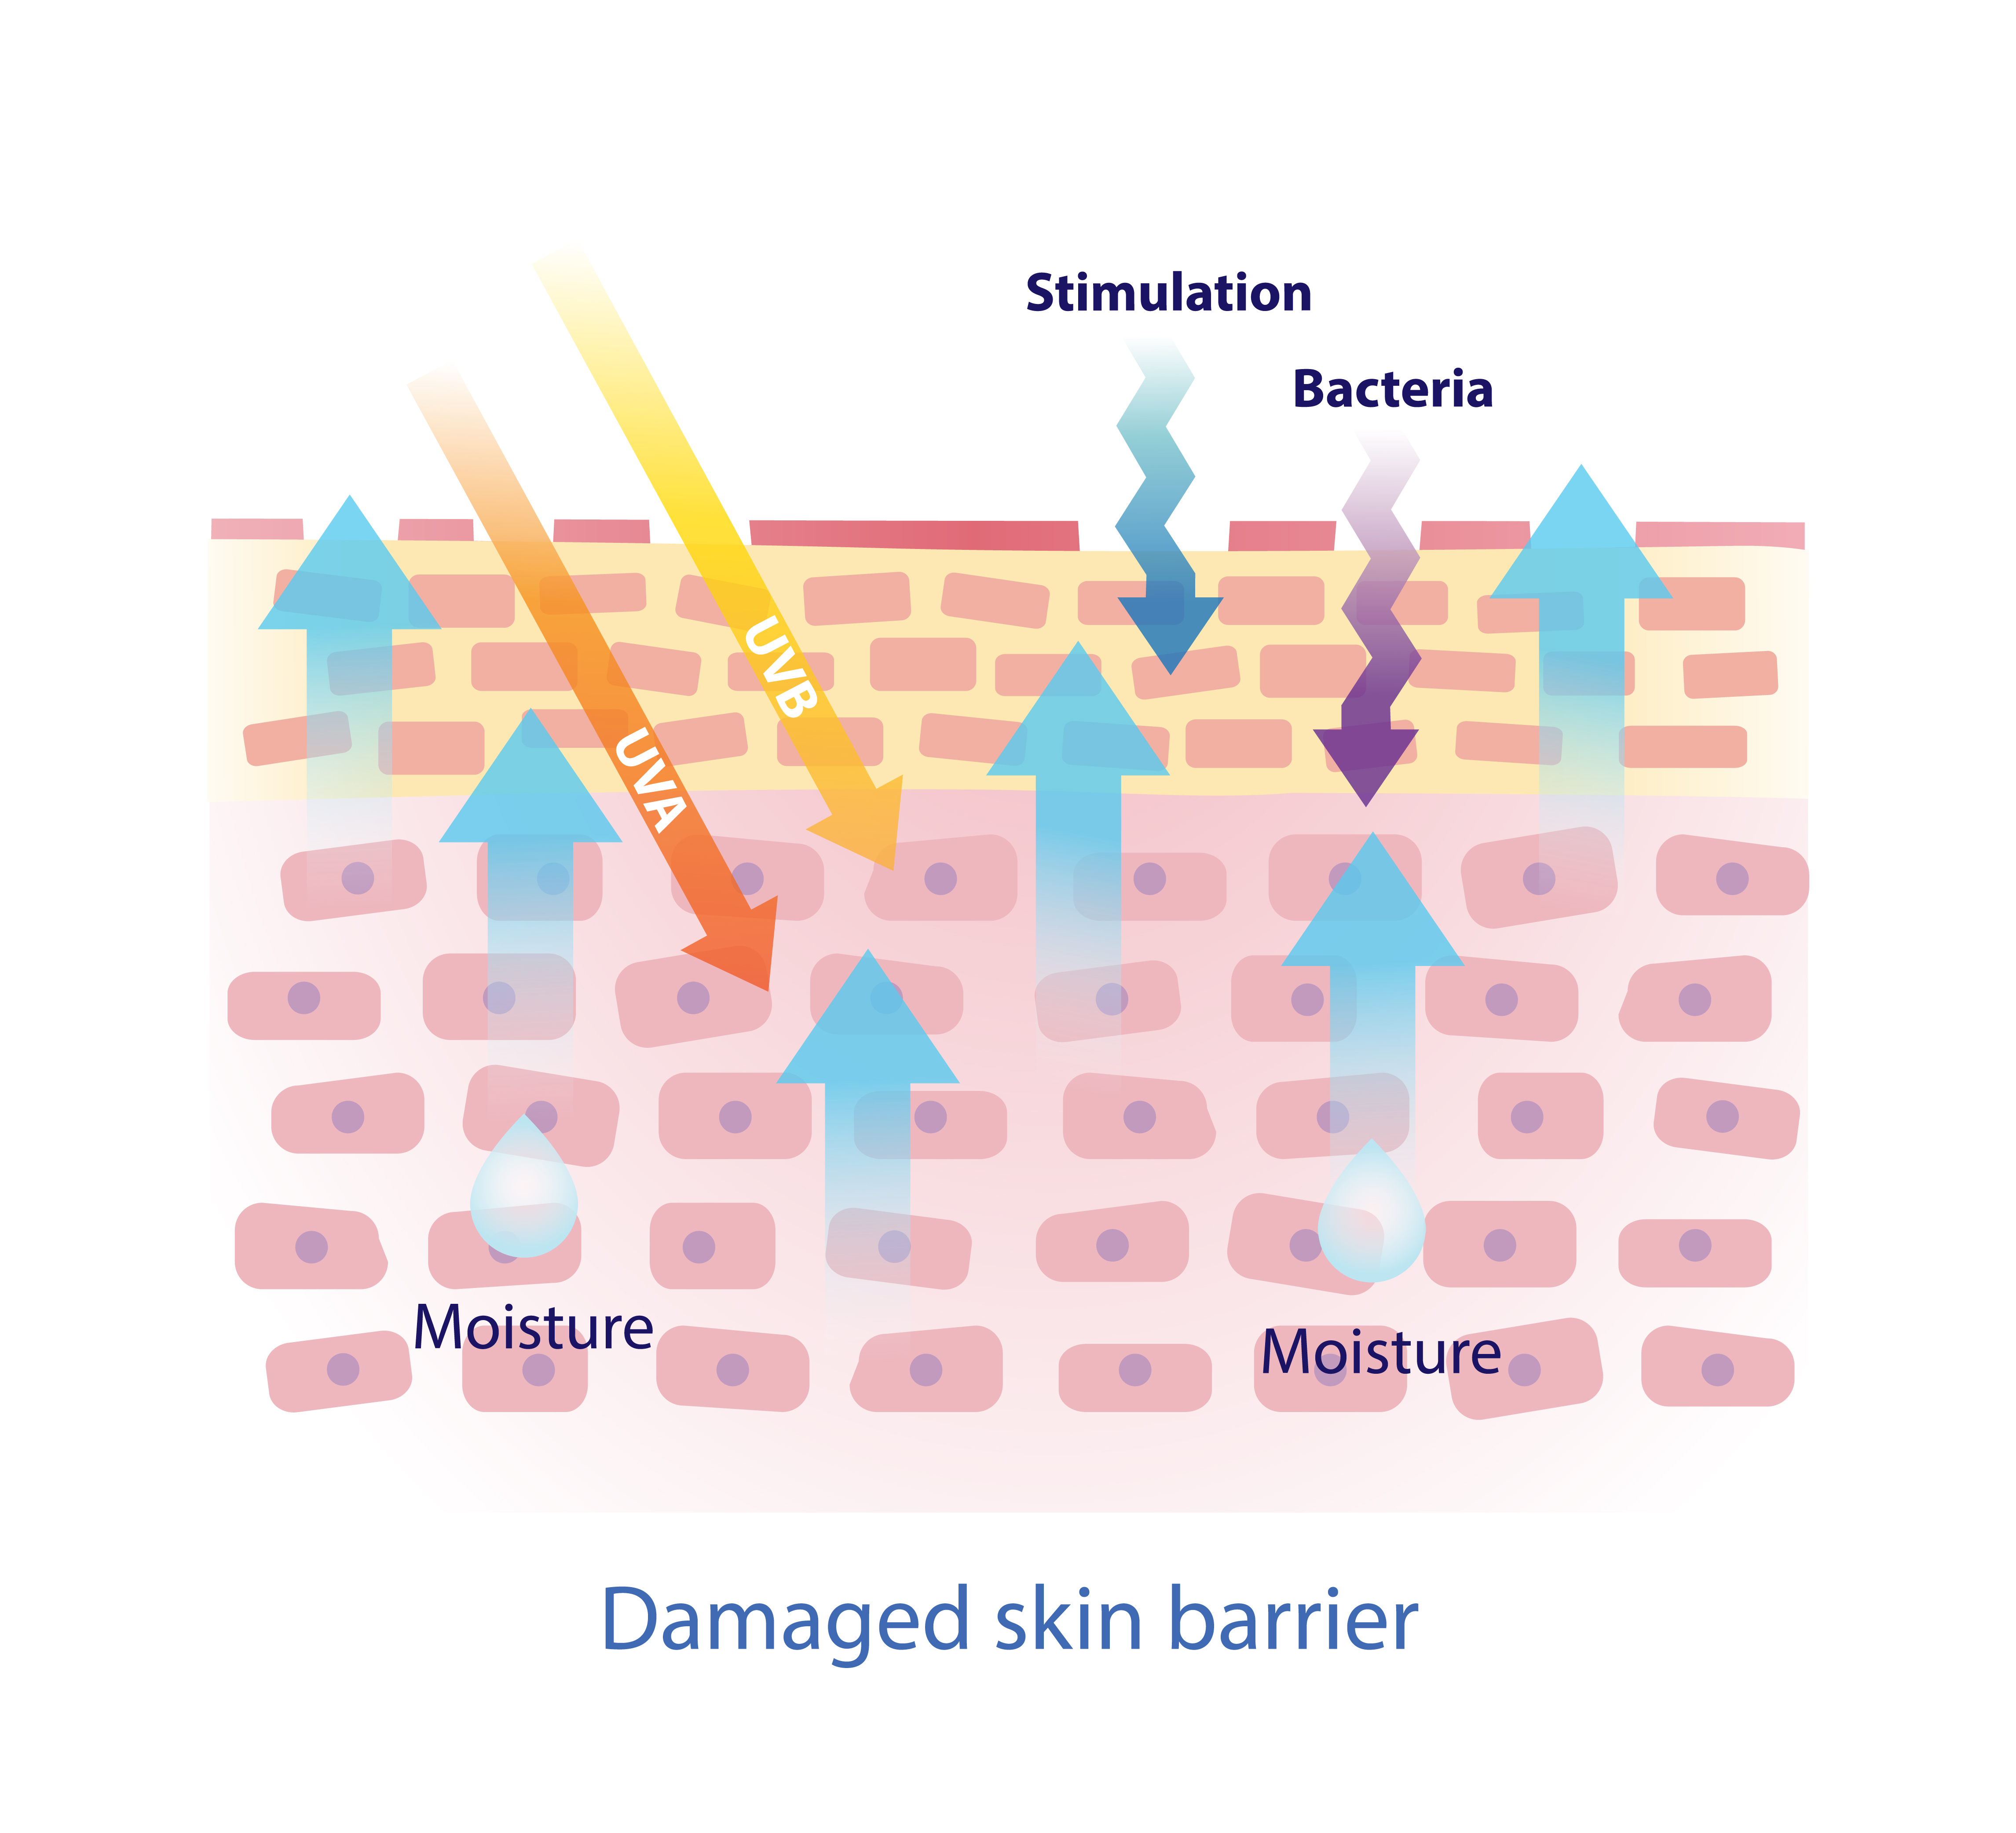 Illustration of a damaged skin barrier that needs skin barrier repair